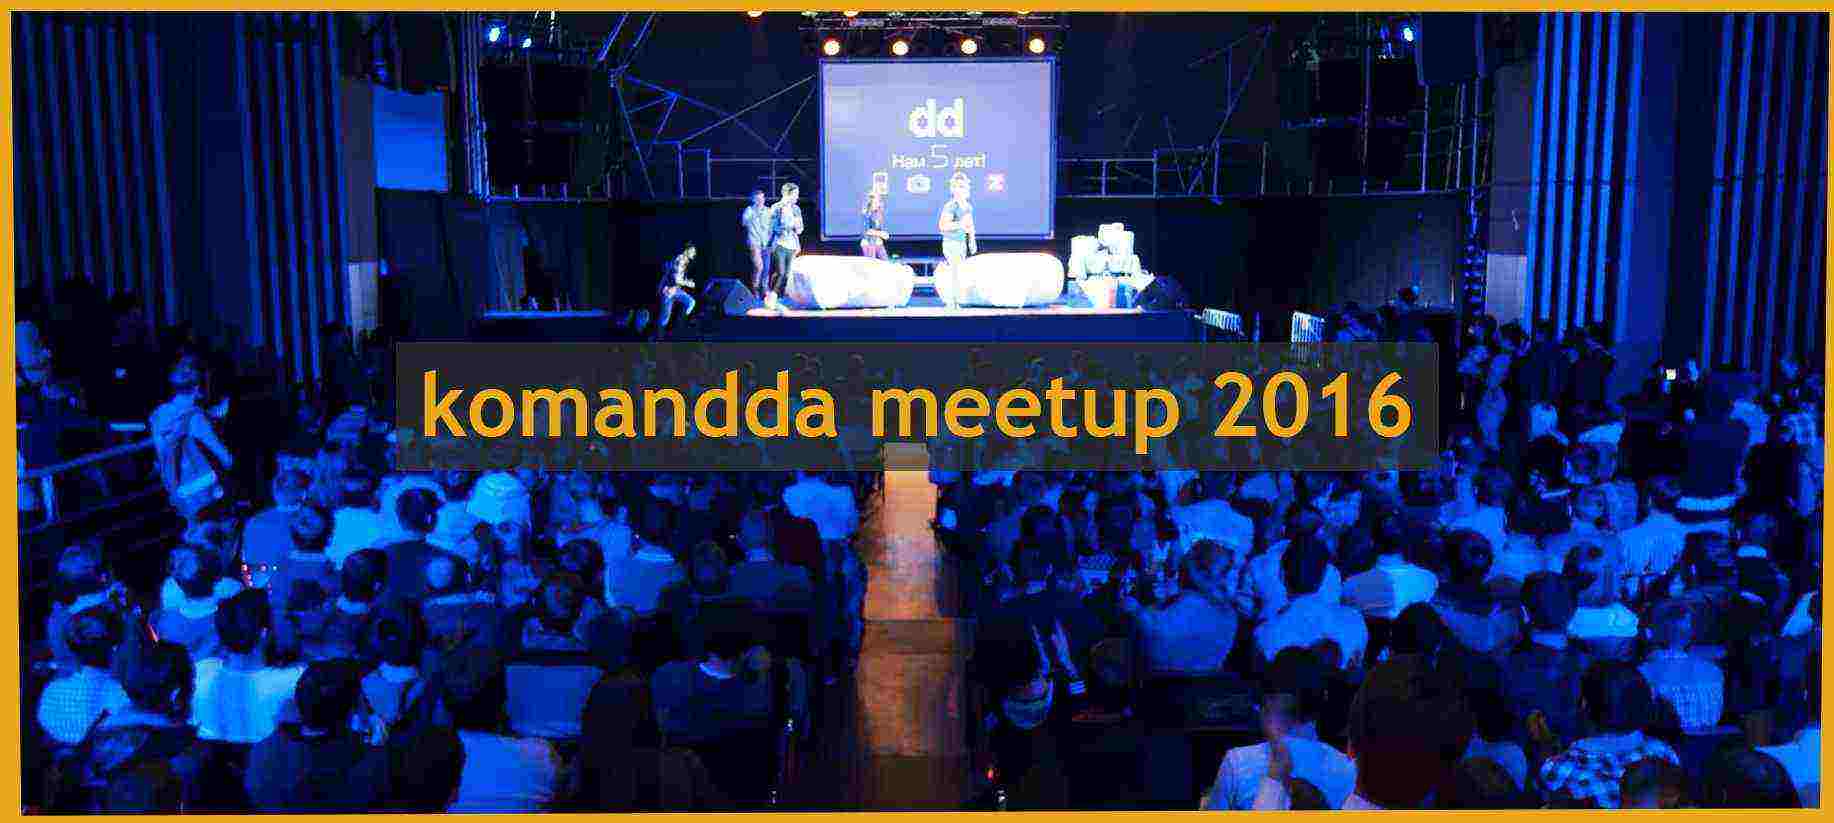 Новая партия билетов на Komandda MeetUp 2016!